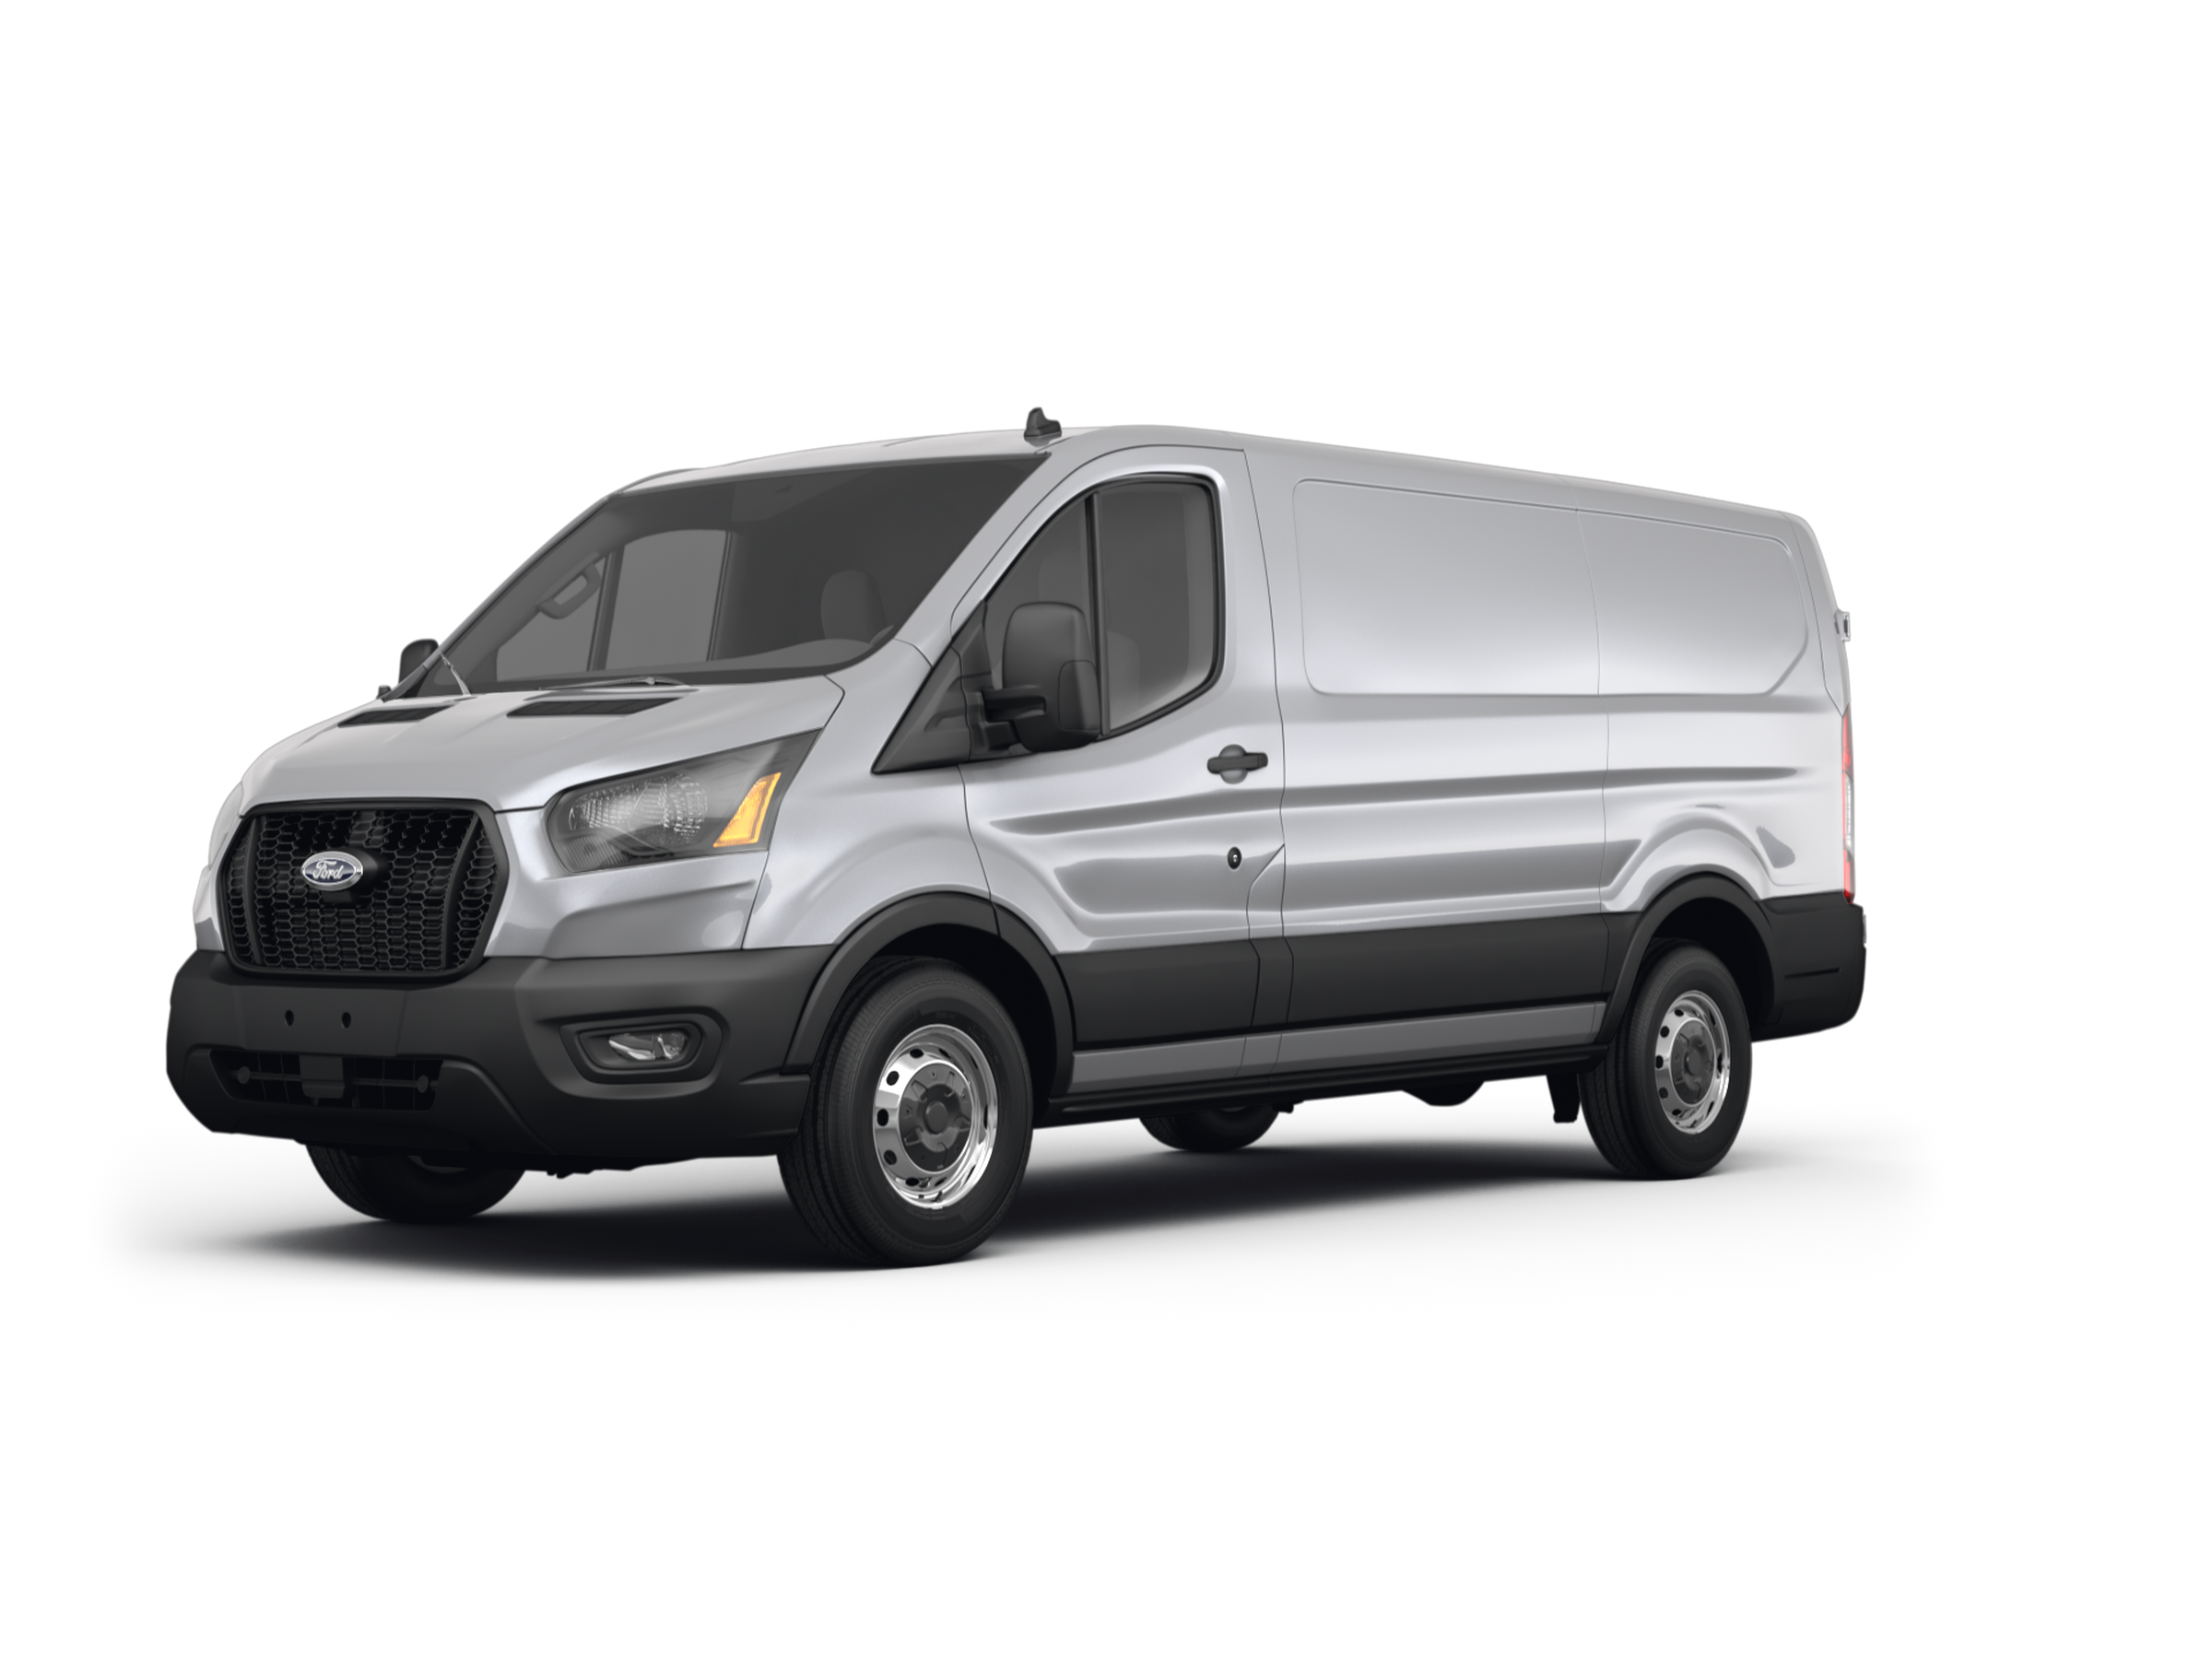 New 2023 Ford Transit 250 Crew Van Reviews, Pricing & Specs Kelley